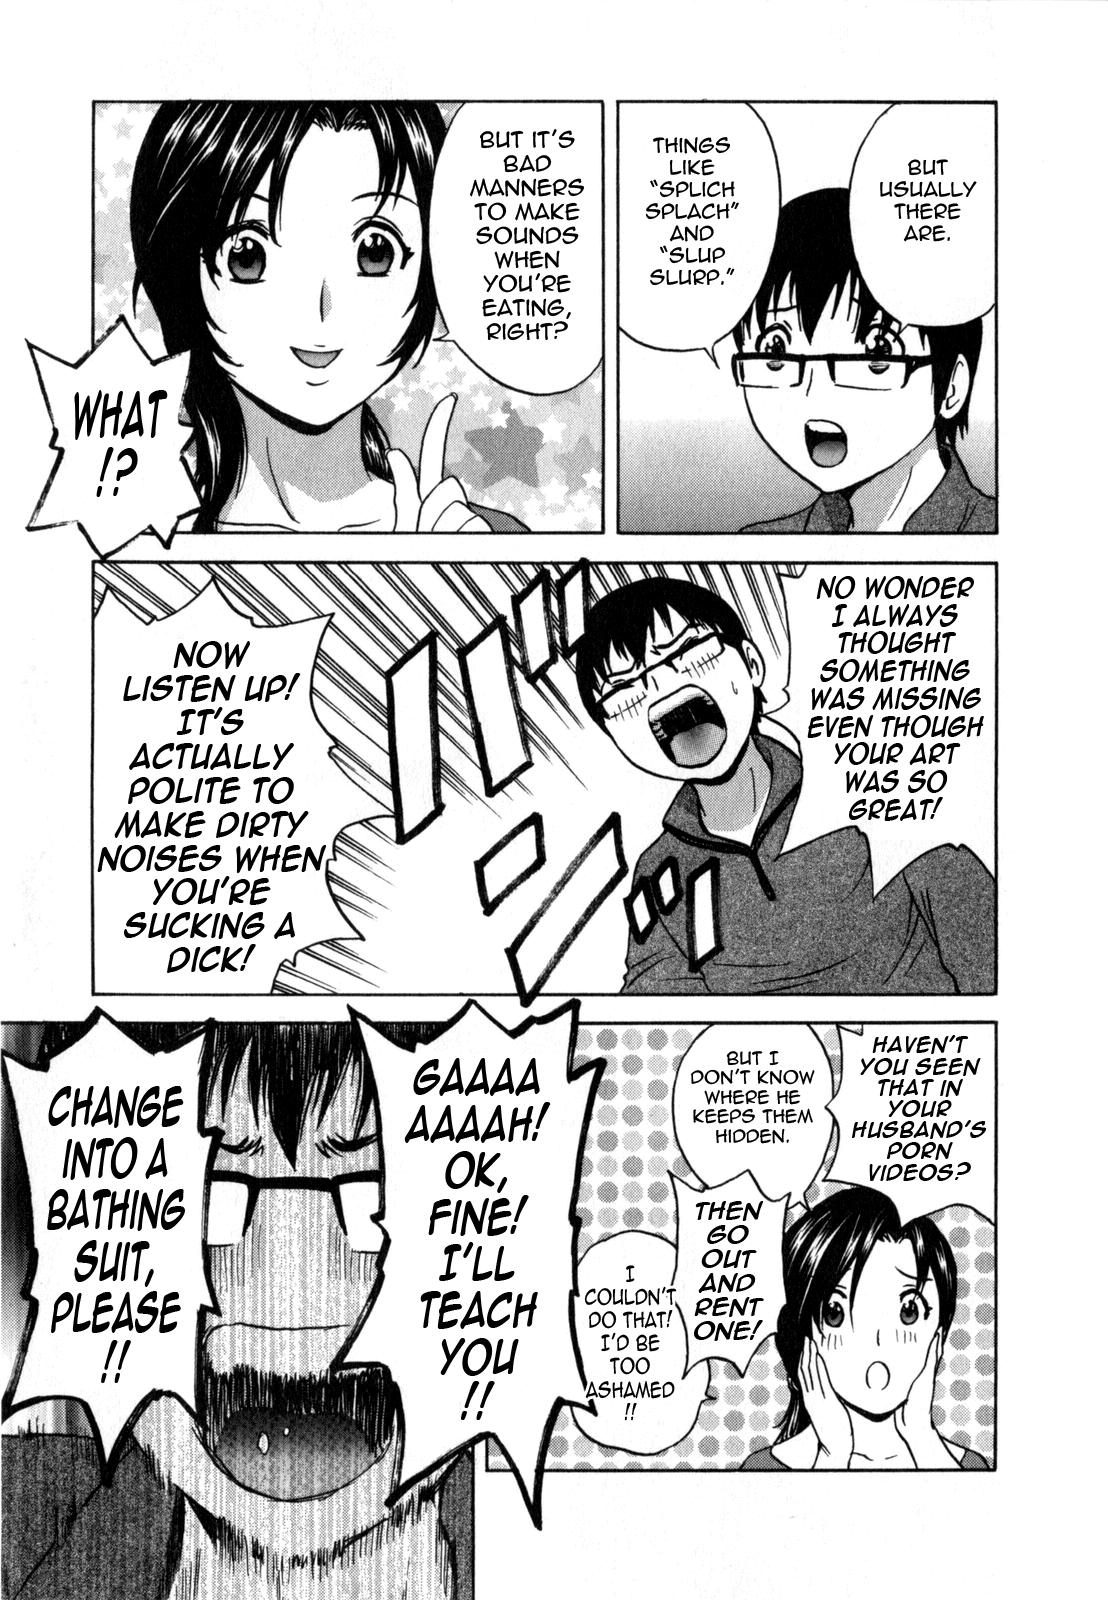 [Hidemaru] Life with Married Women Just Like a Manga 1 - Ch. 1-2 [English] {Tadanohito} 15